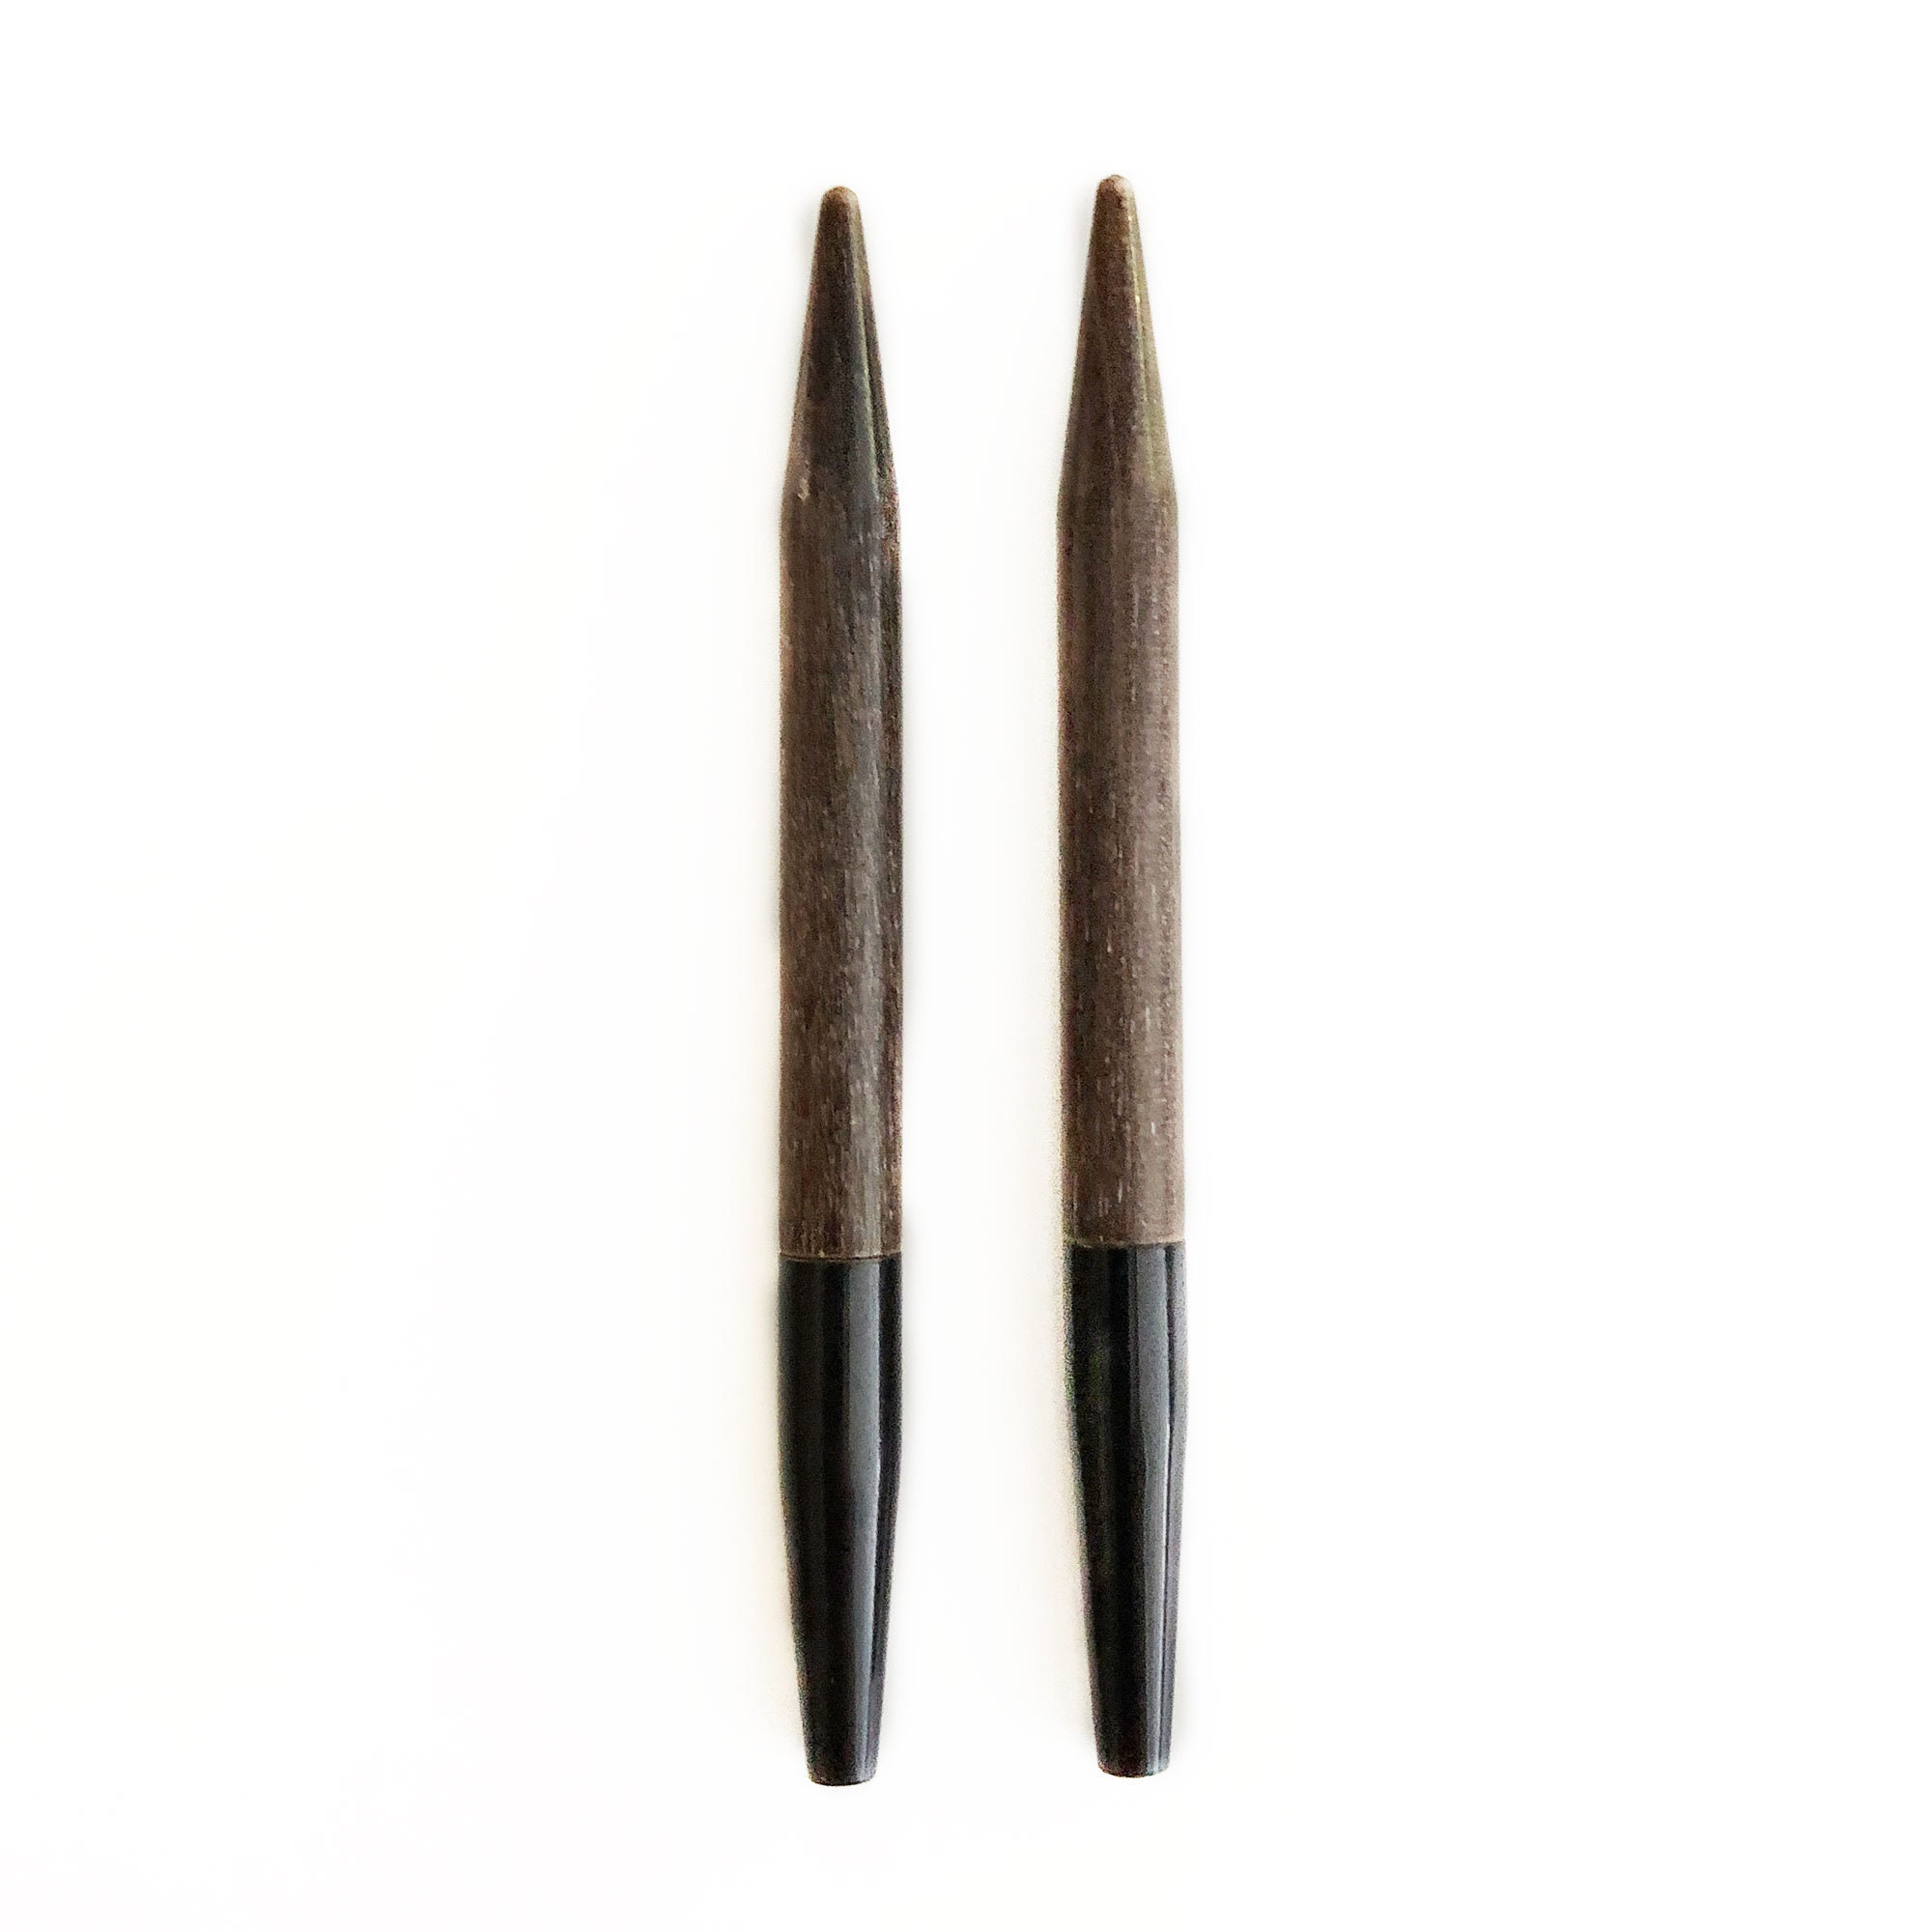 1 piece Lykke Indigo 3.5 inch (7cm) Interchange Circular Needle